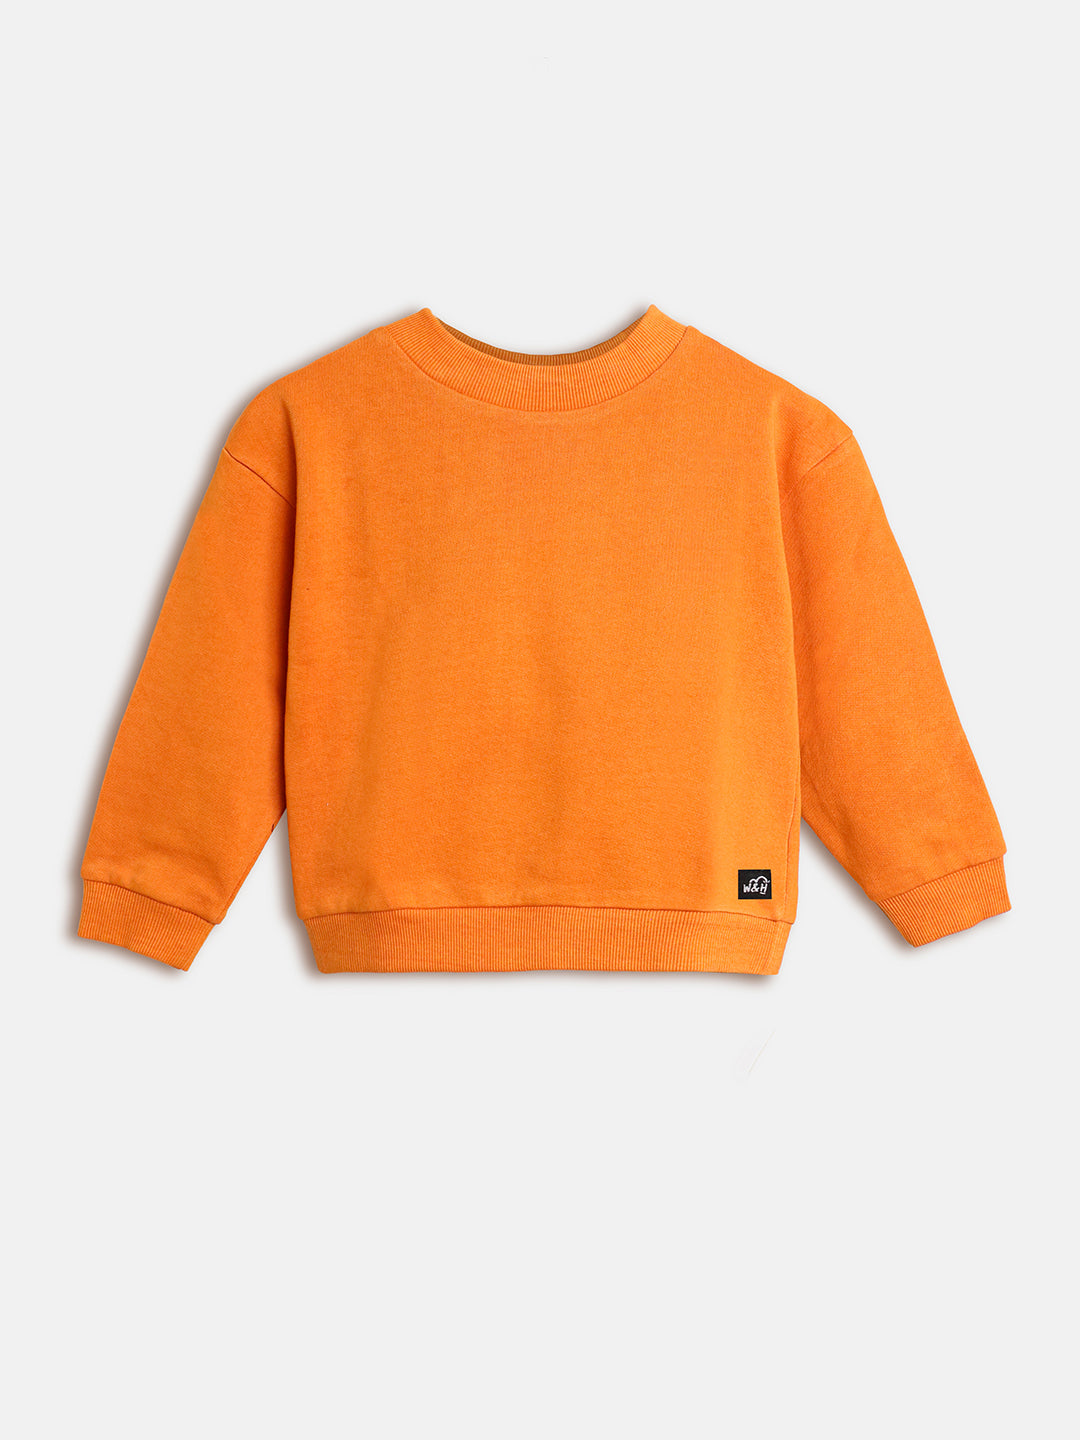 Geometric Alphabets Cotton Dungaree With Orange Sweatshirt